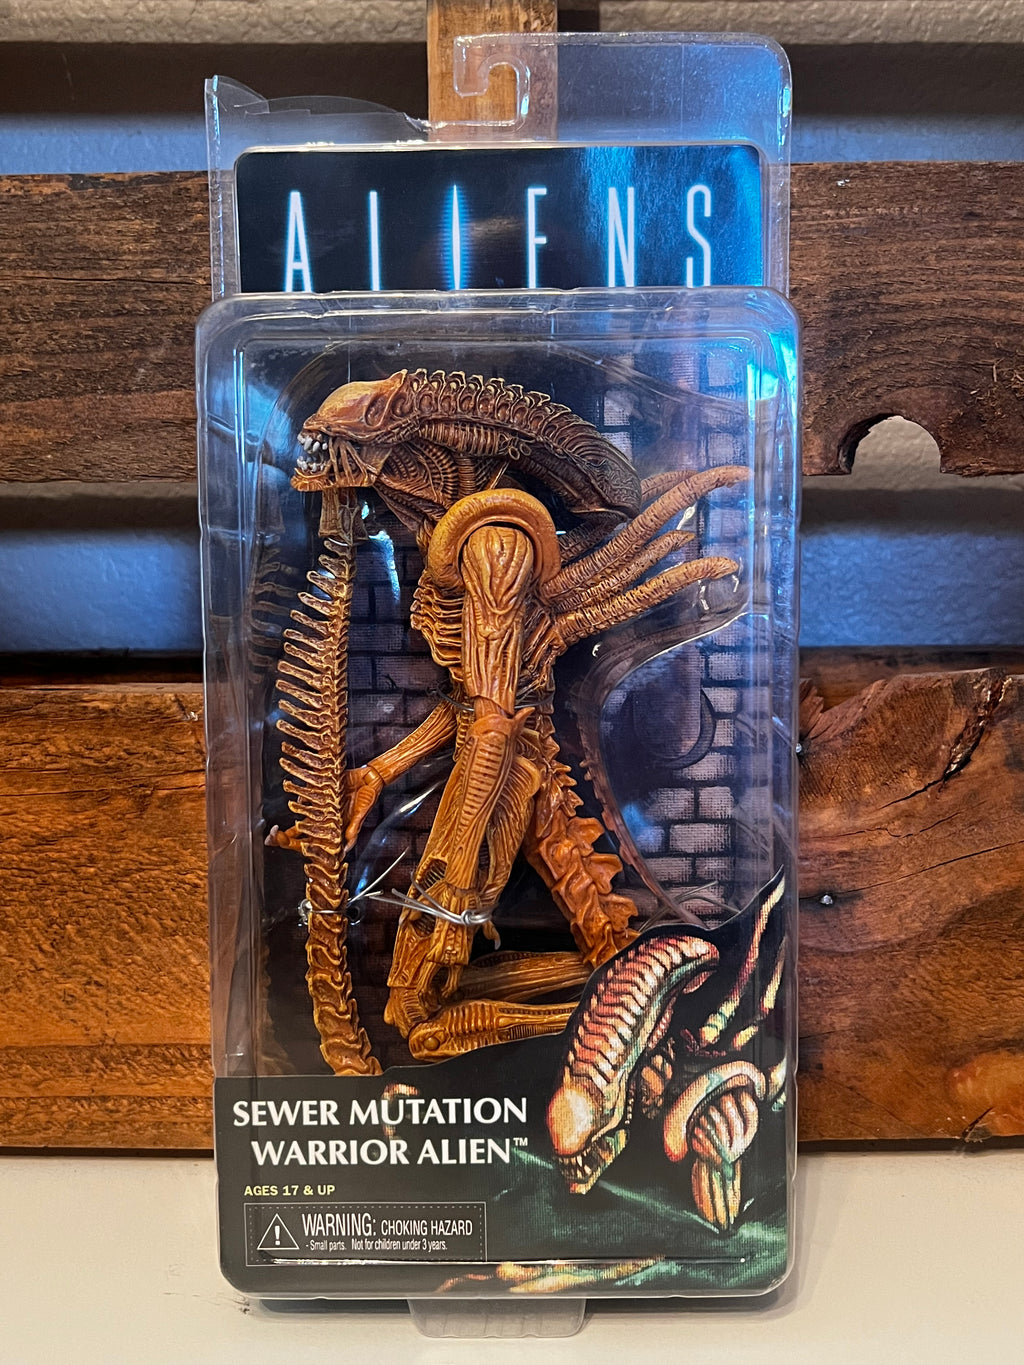 Neca Aliens Sewer Mutation Alien